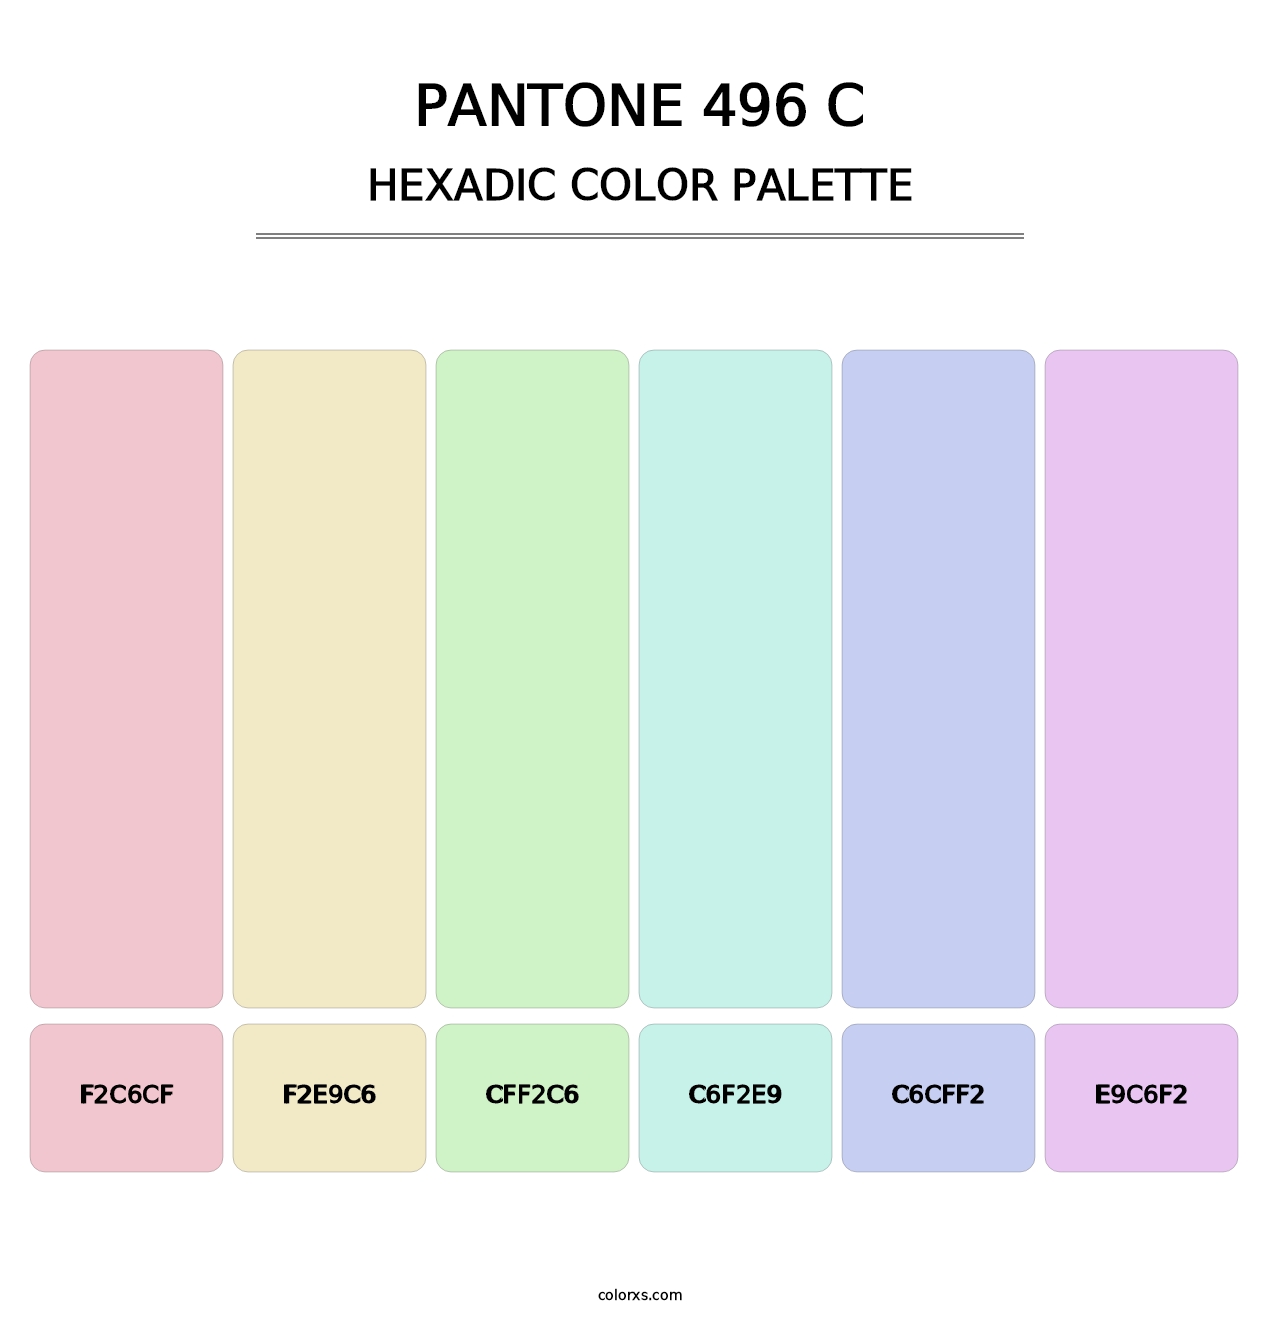 PANTONE 496 C - Hexadic Color Palette